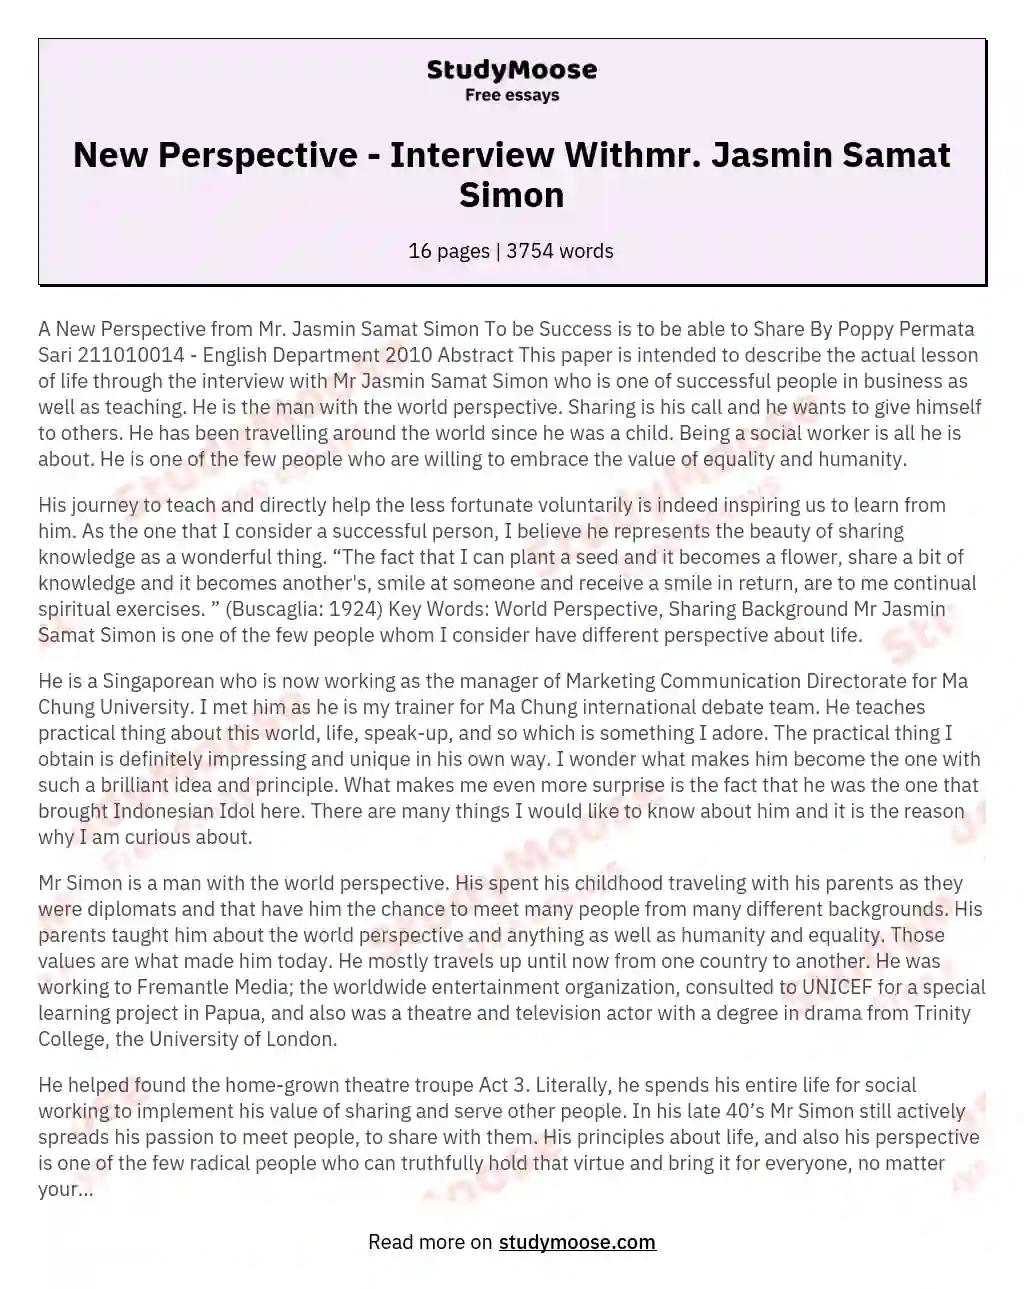 New Perspective - Interview Withmr. Jasmin Samat Simon essay